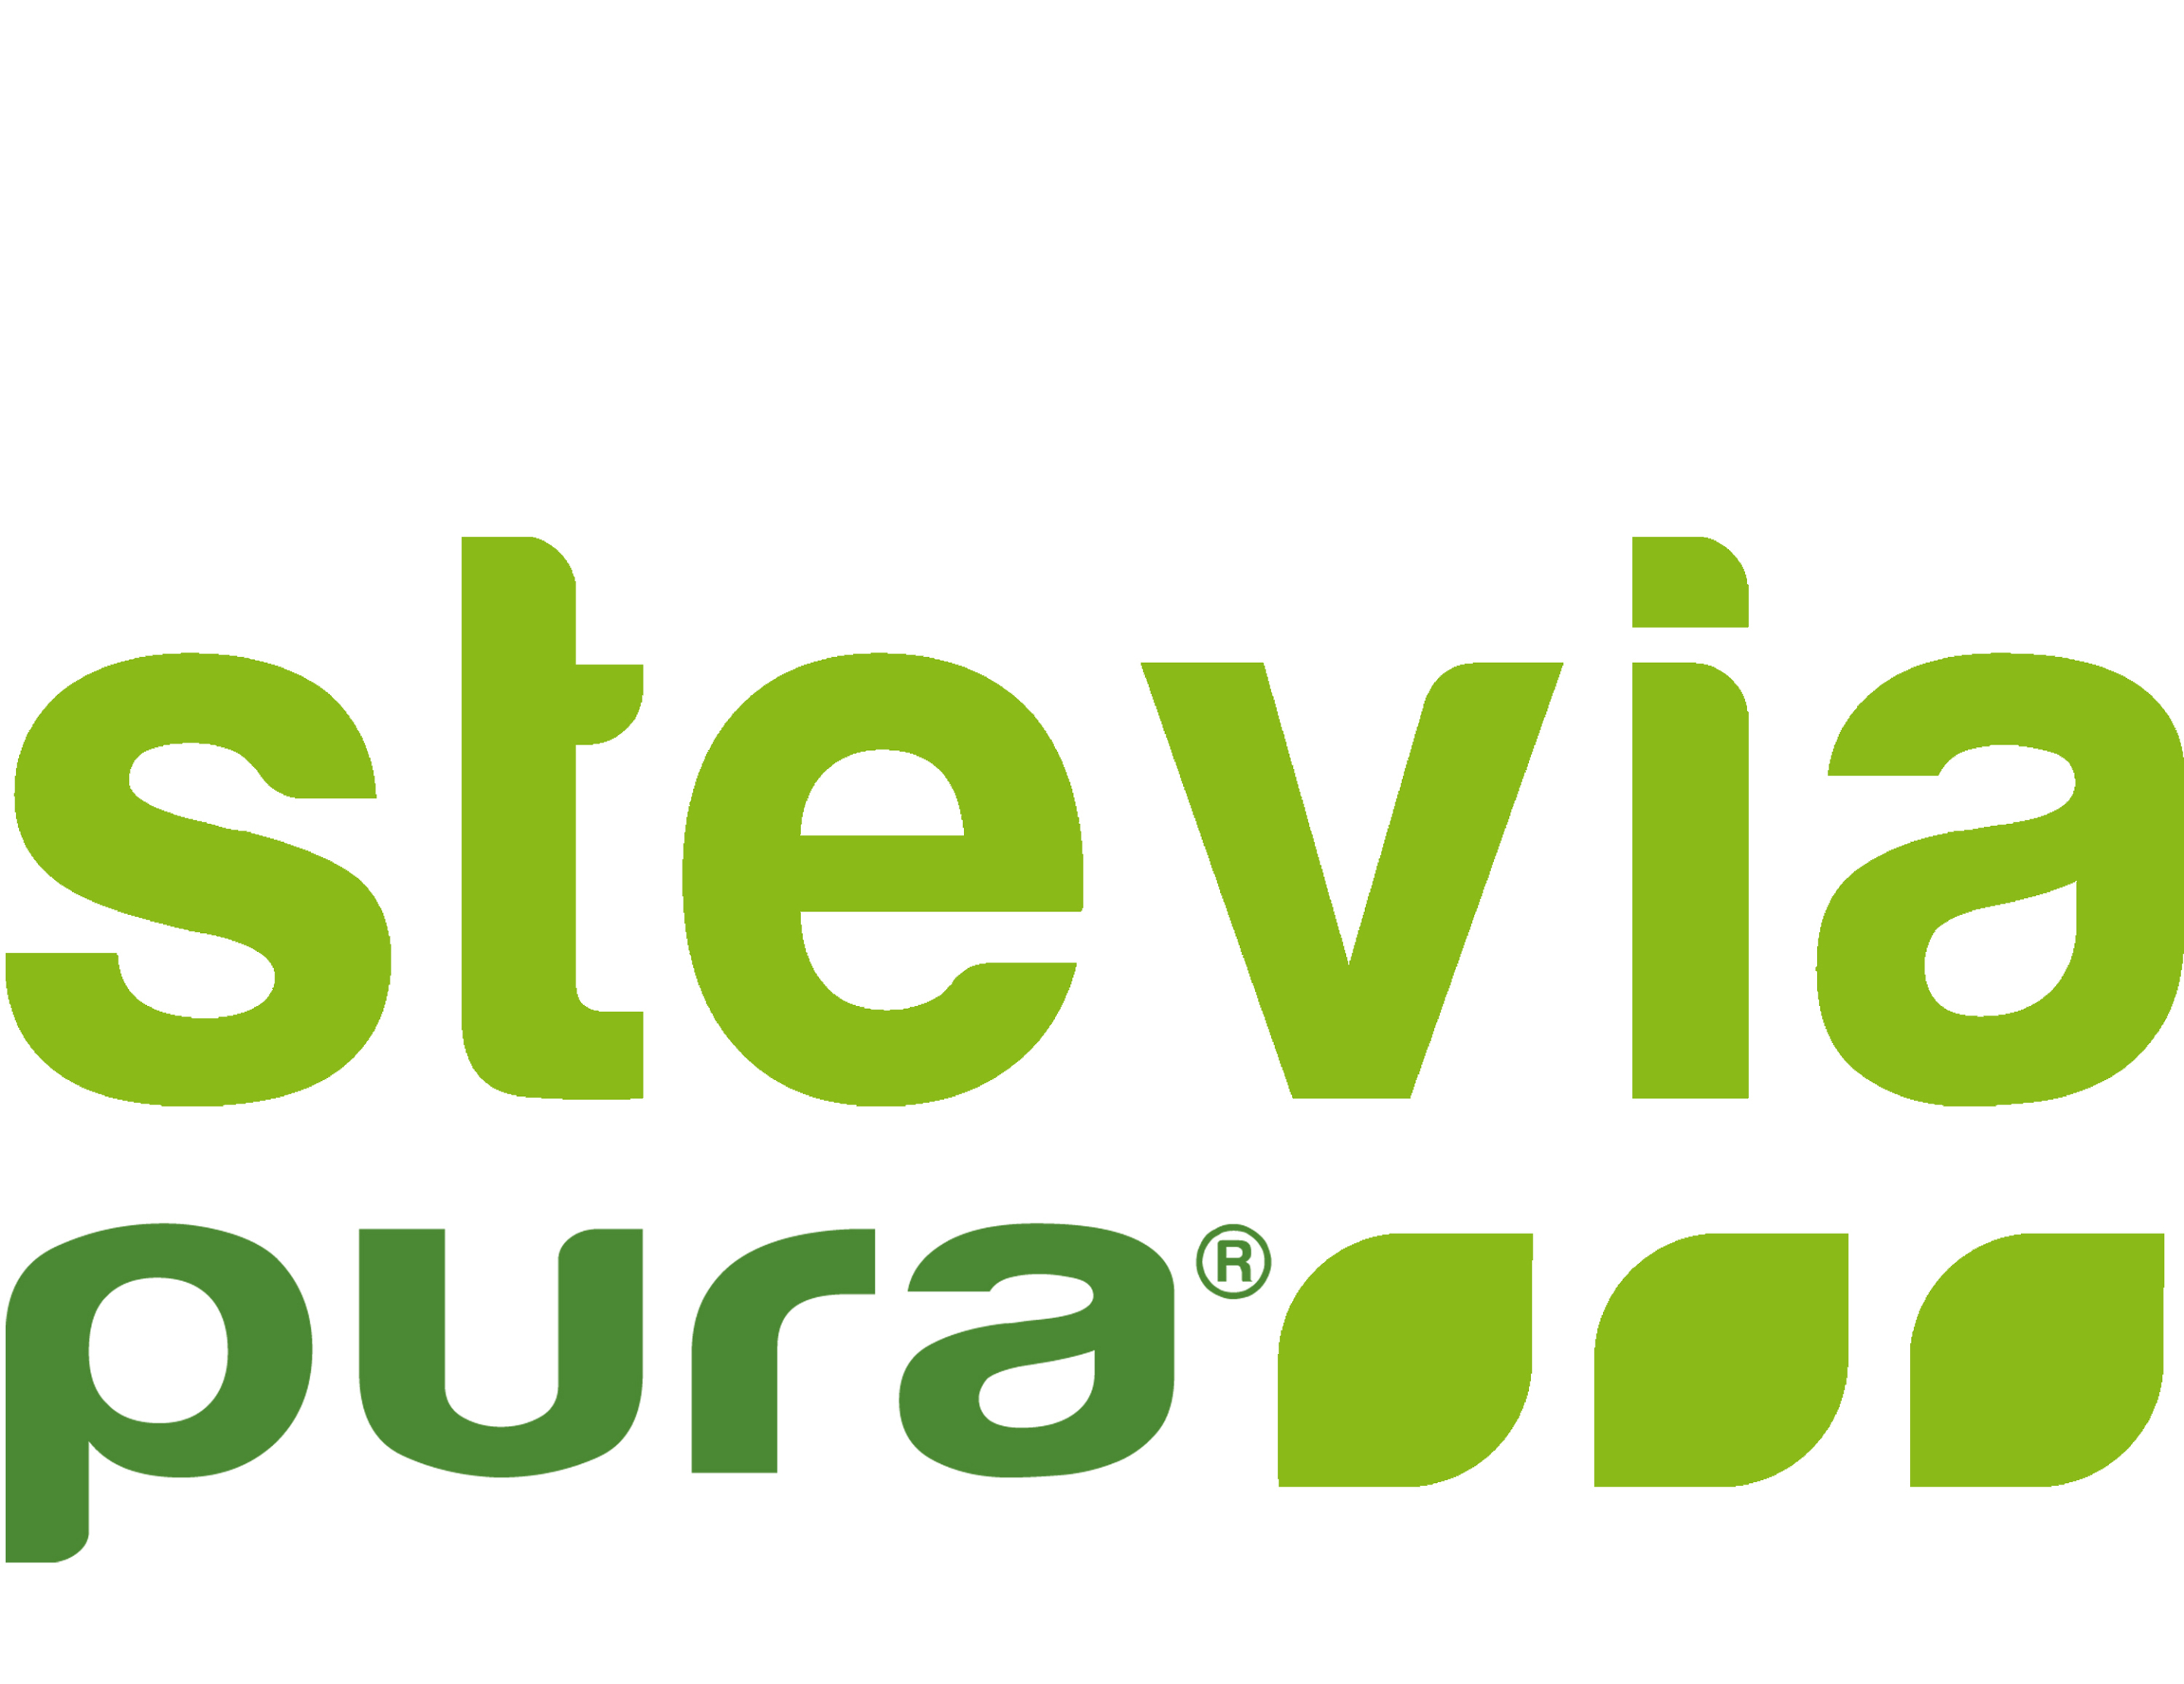 La marca steviapura